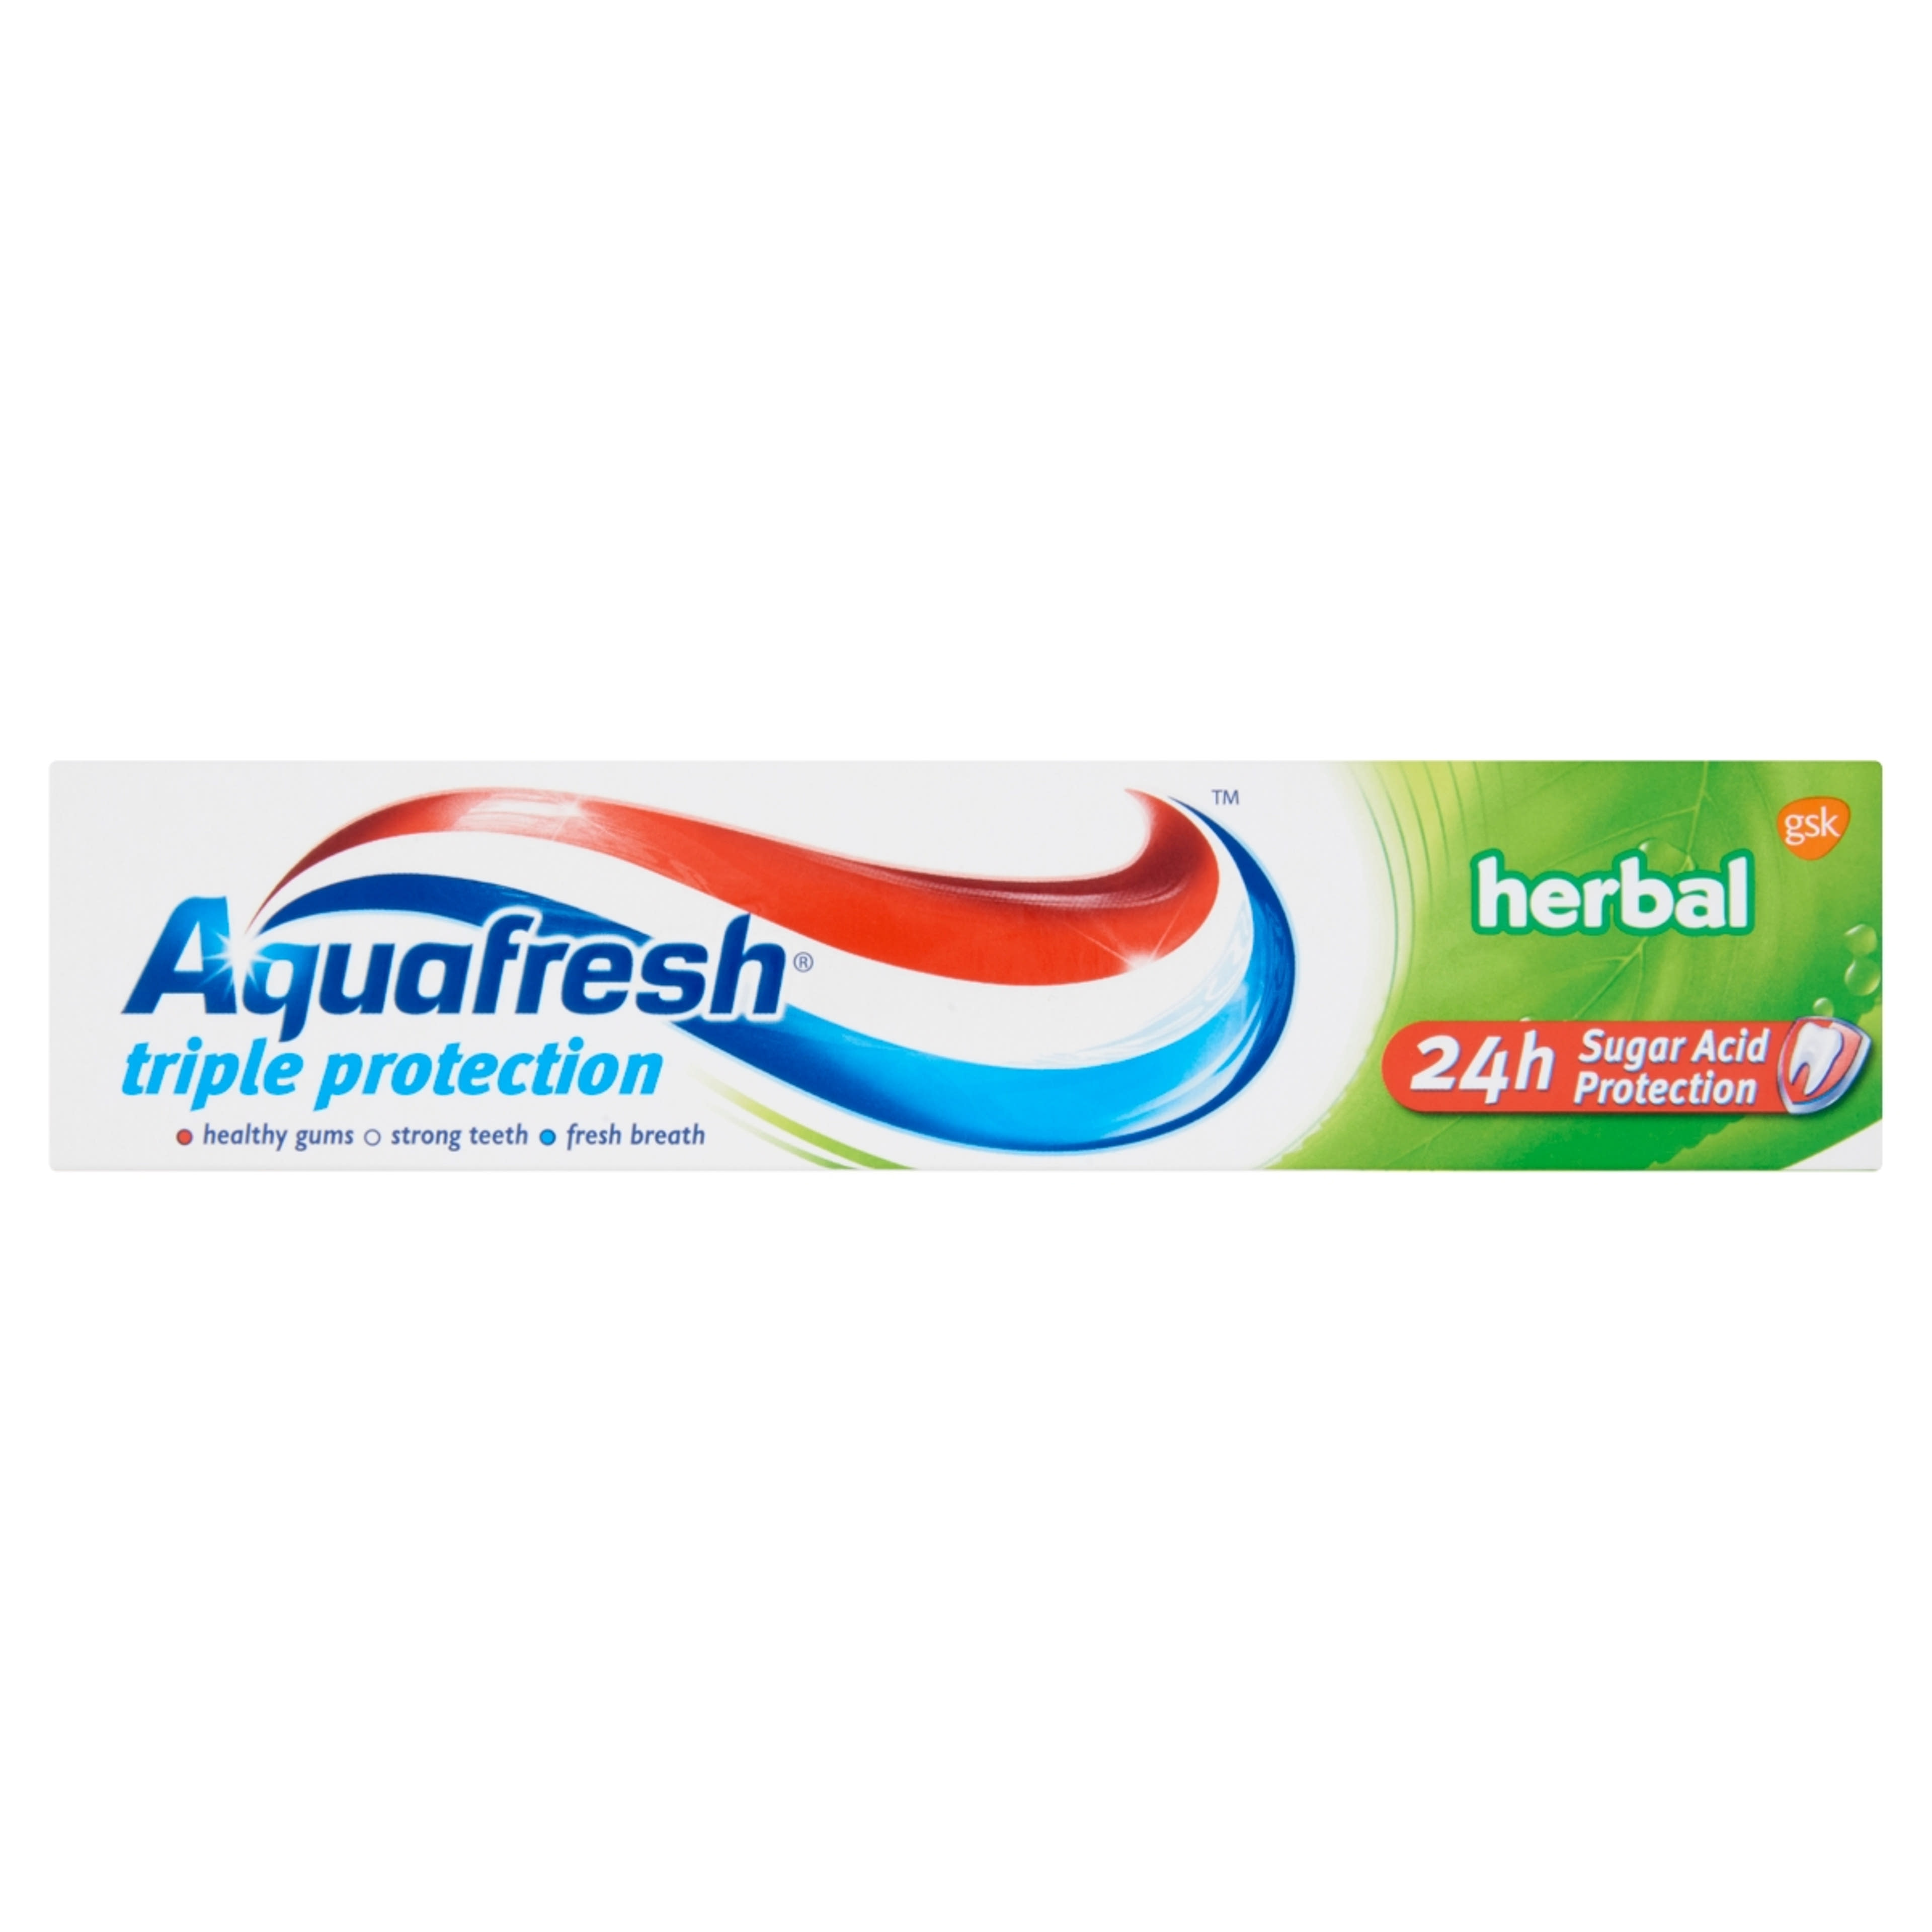 Aquafresh Herbal fogkrém - 100 ml-1